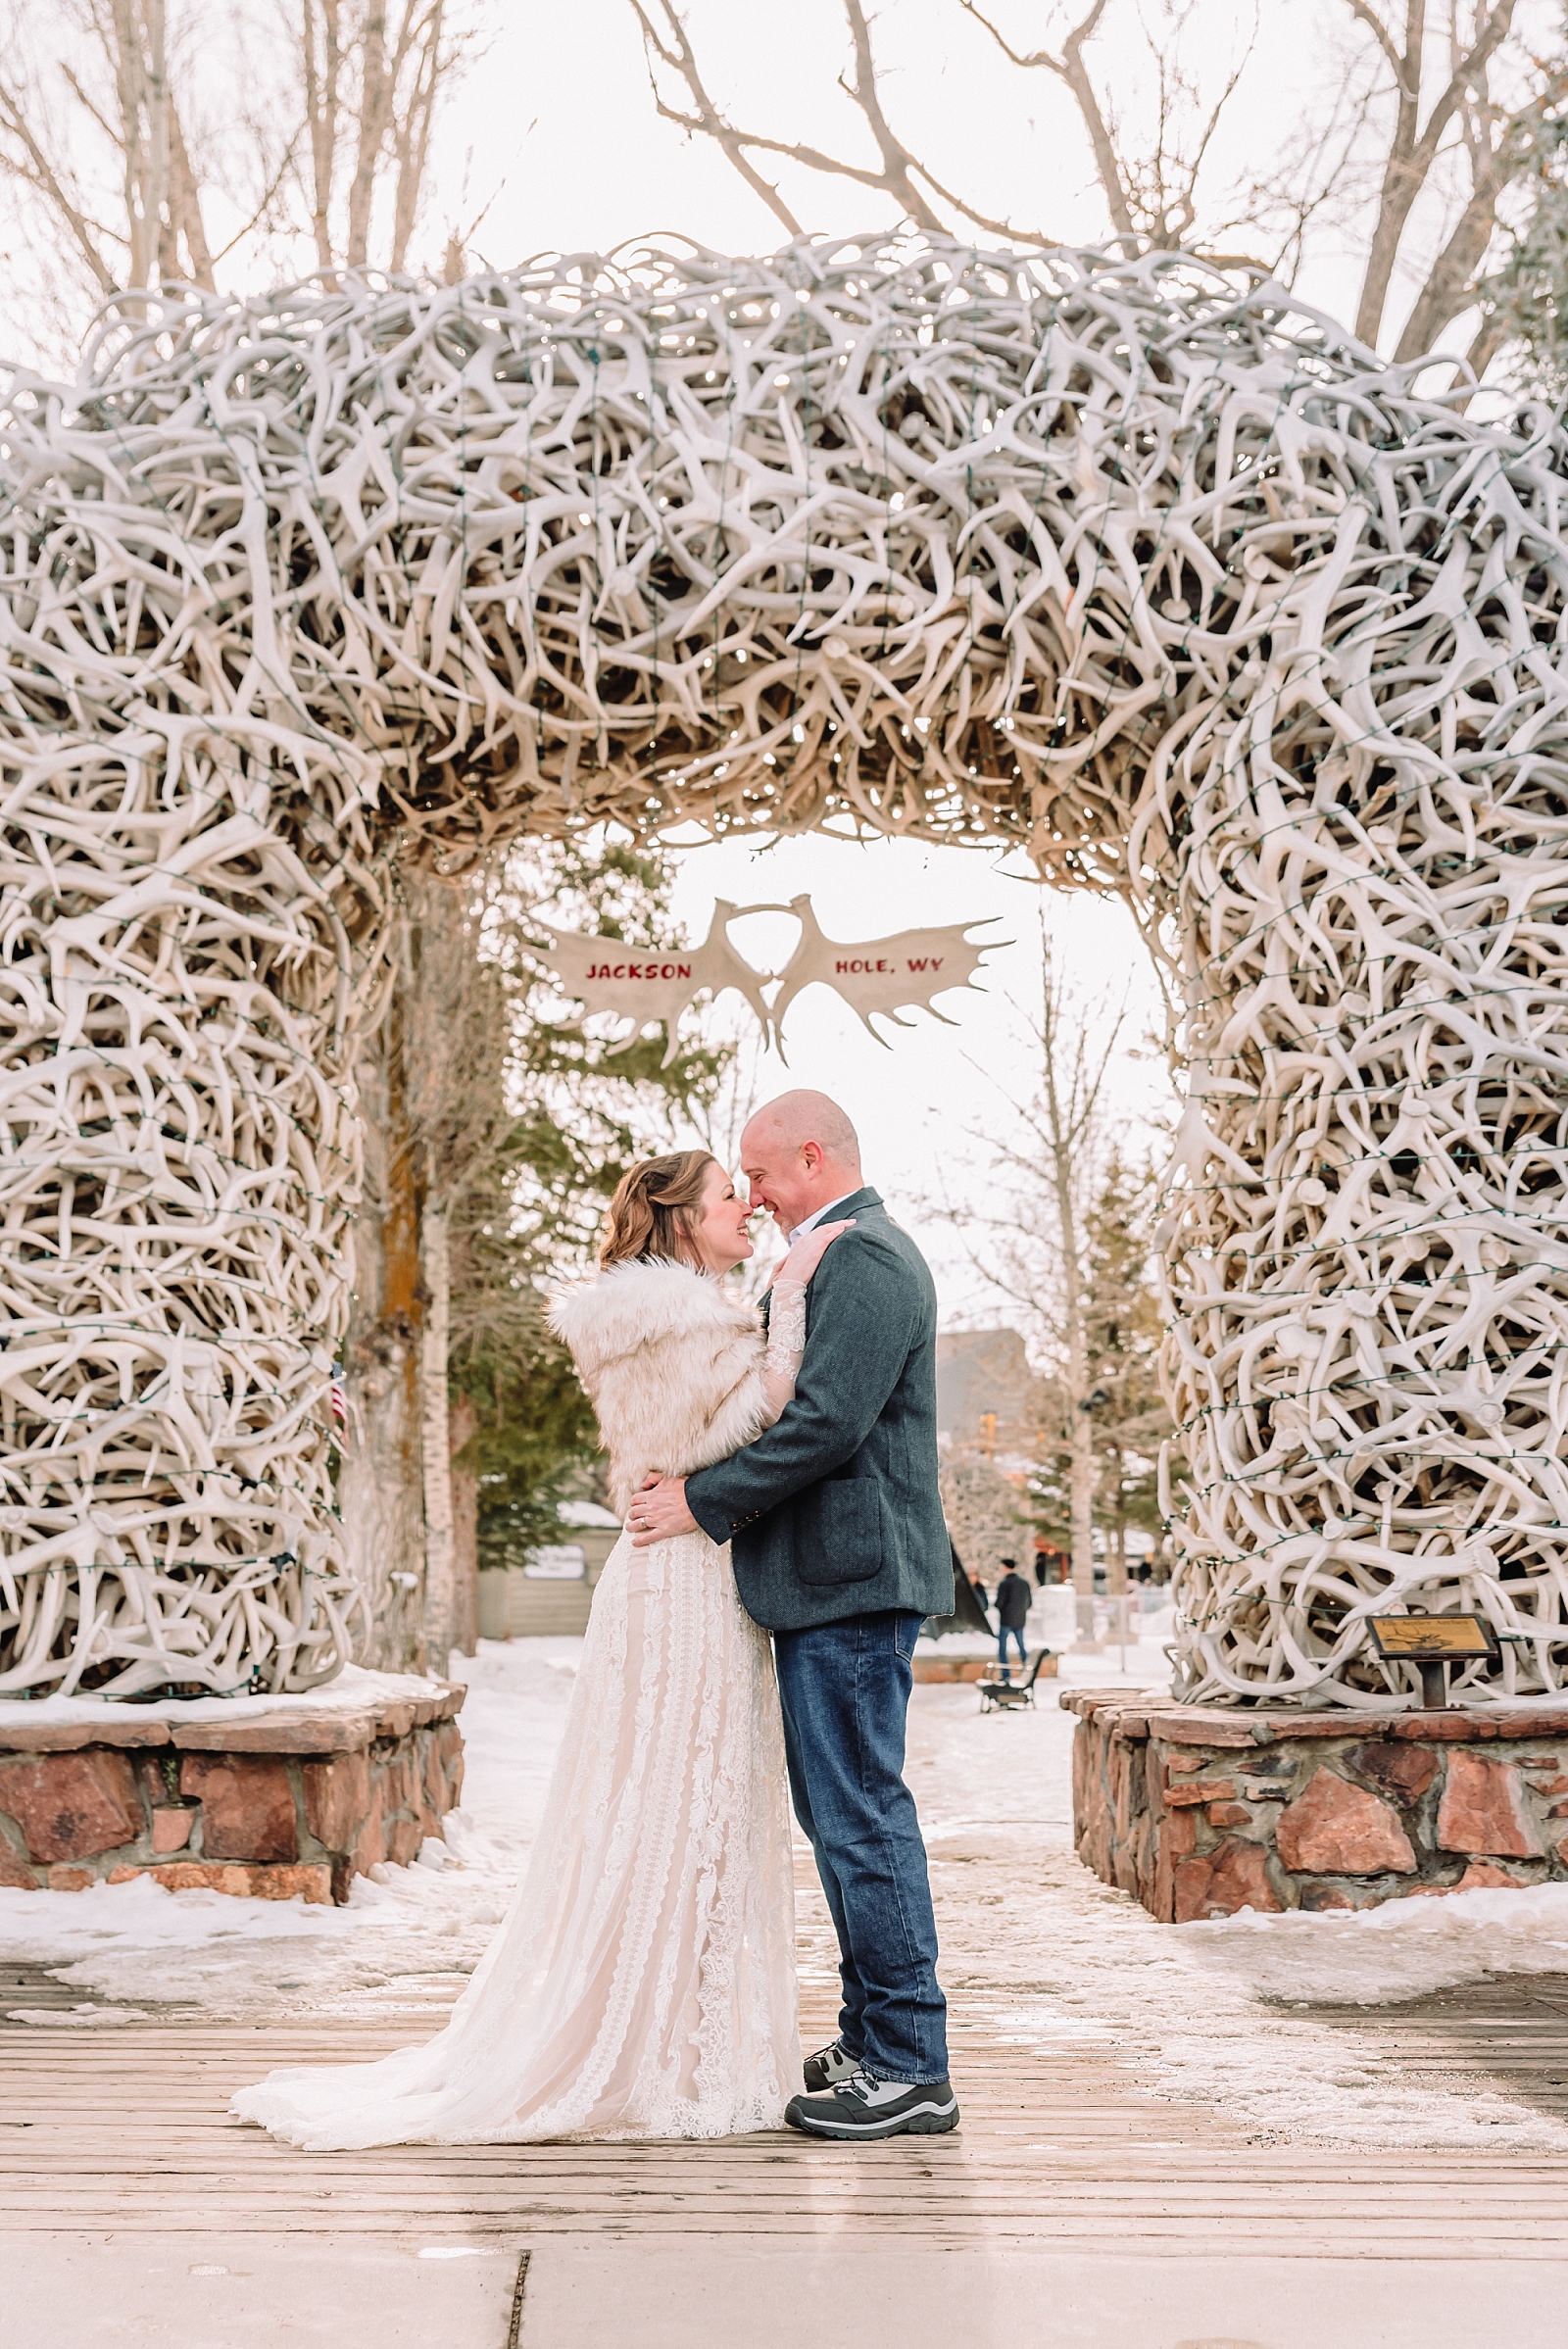 wedding photos under jackson hole antler arches